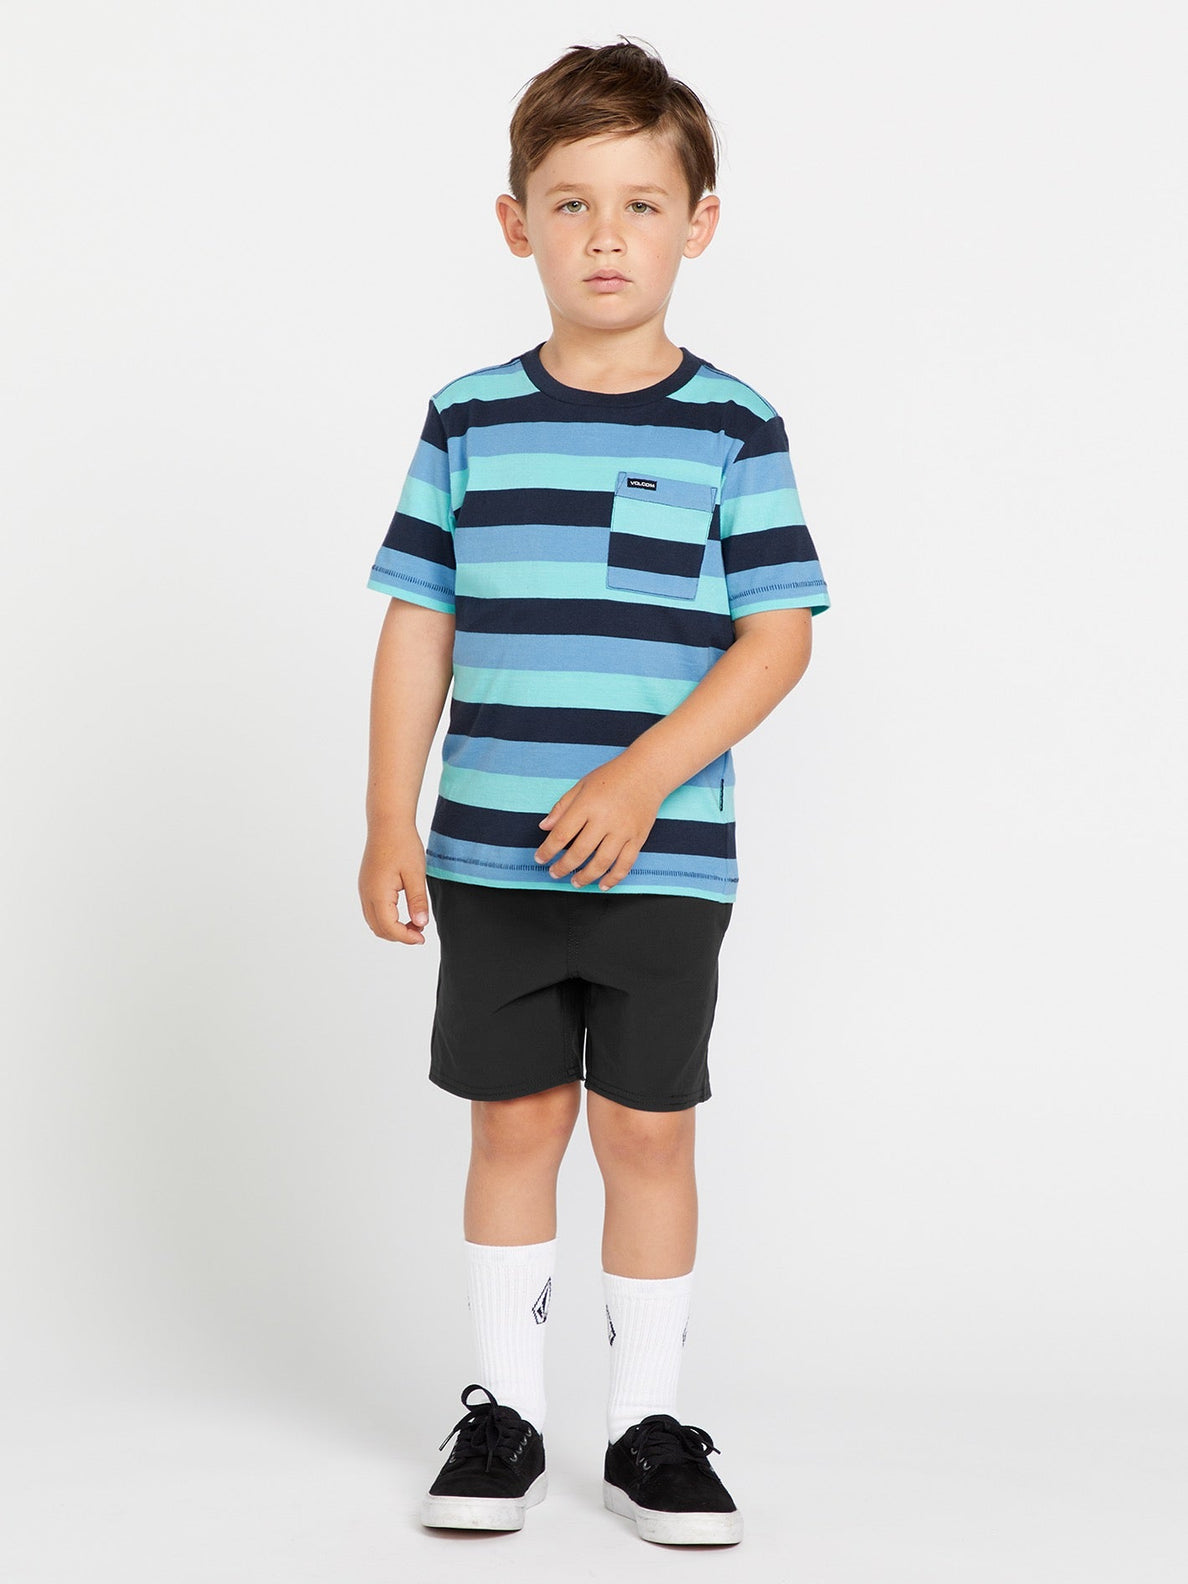 Little Boys Nomoly Hybrid Shorts - Black